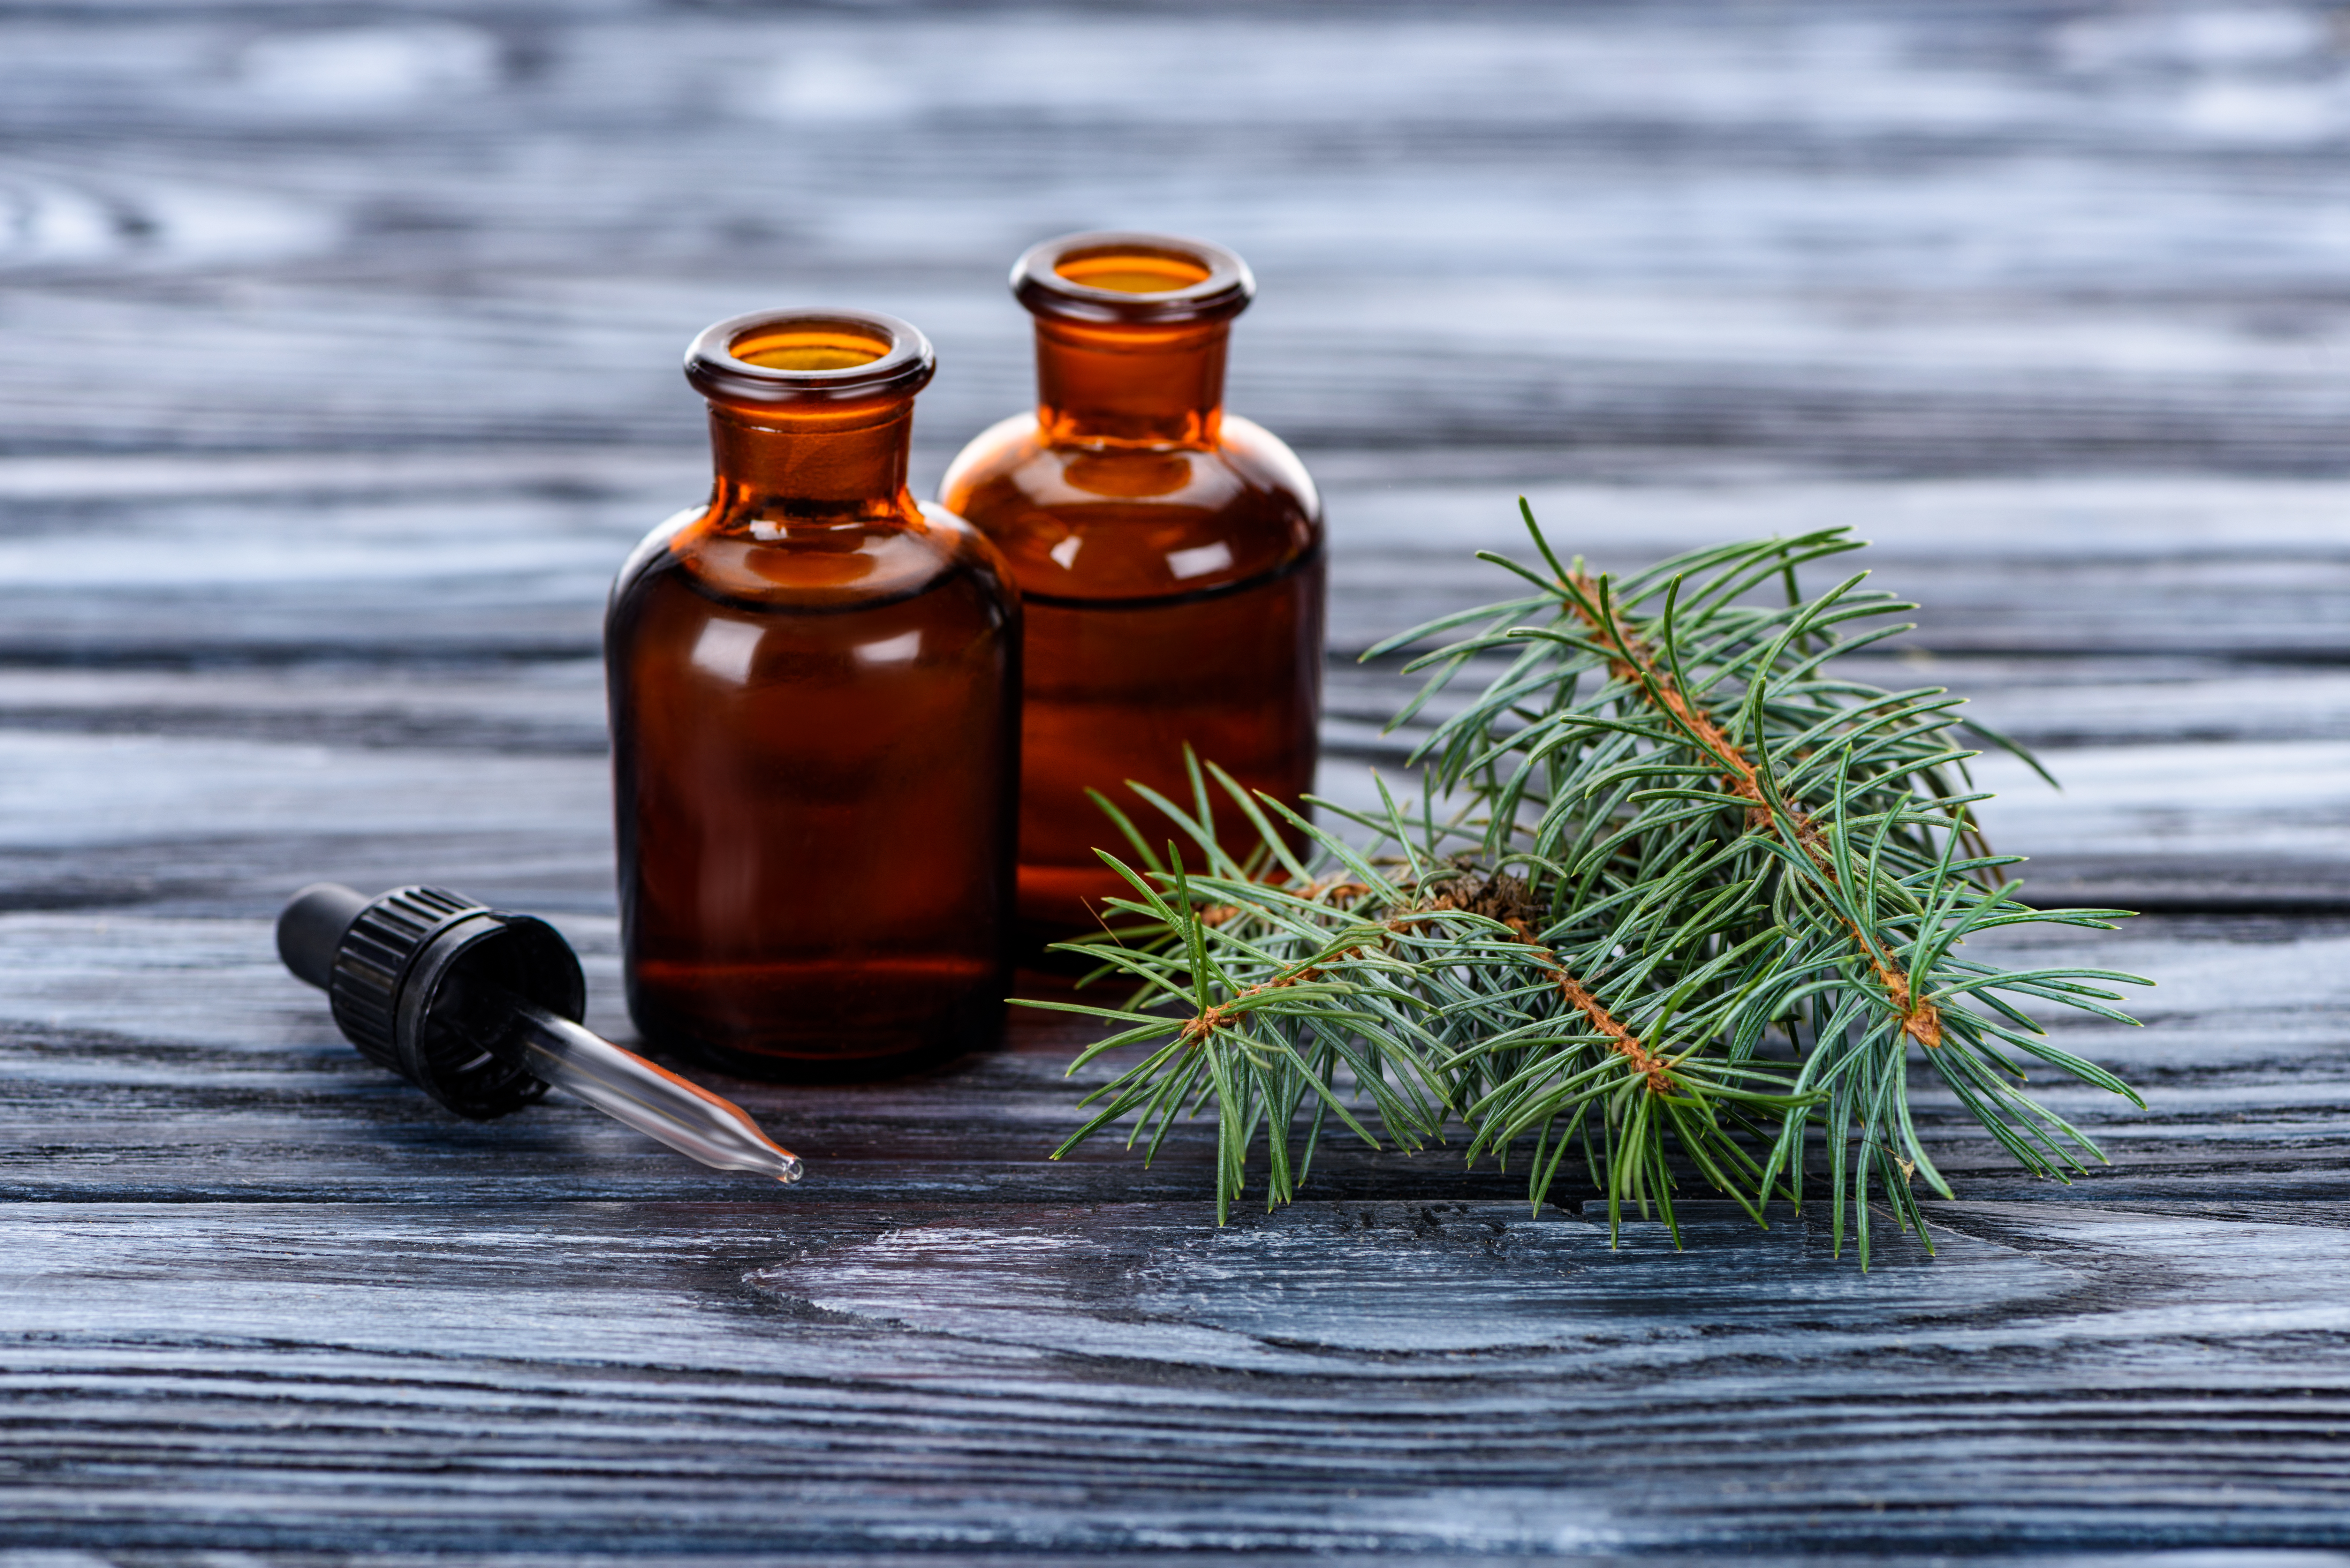 Pine Essential Oils